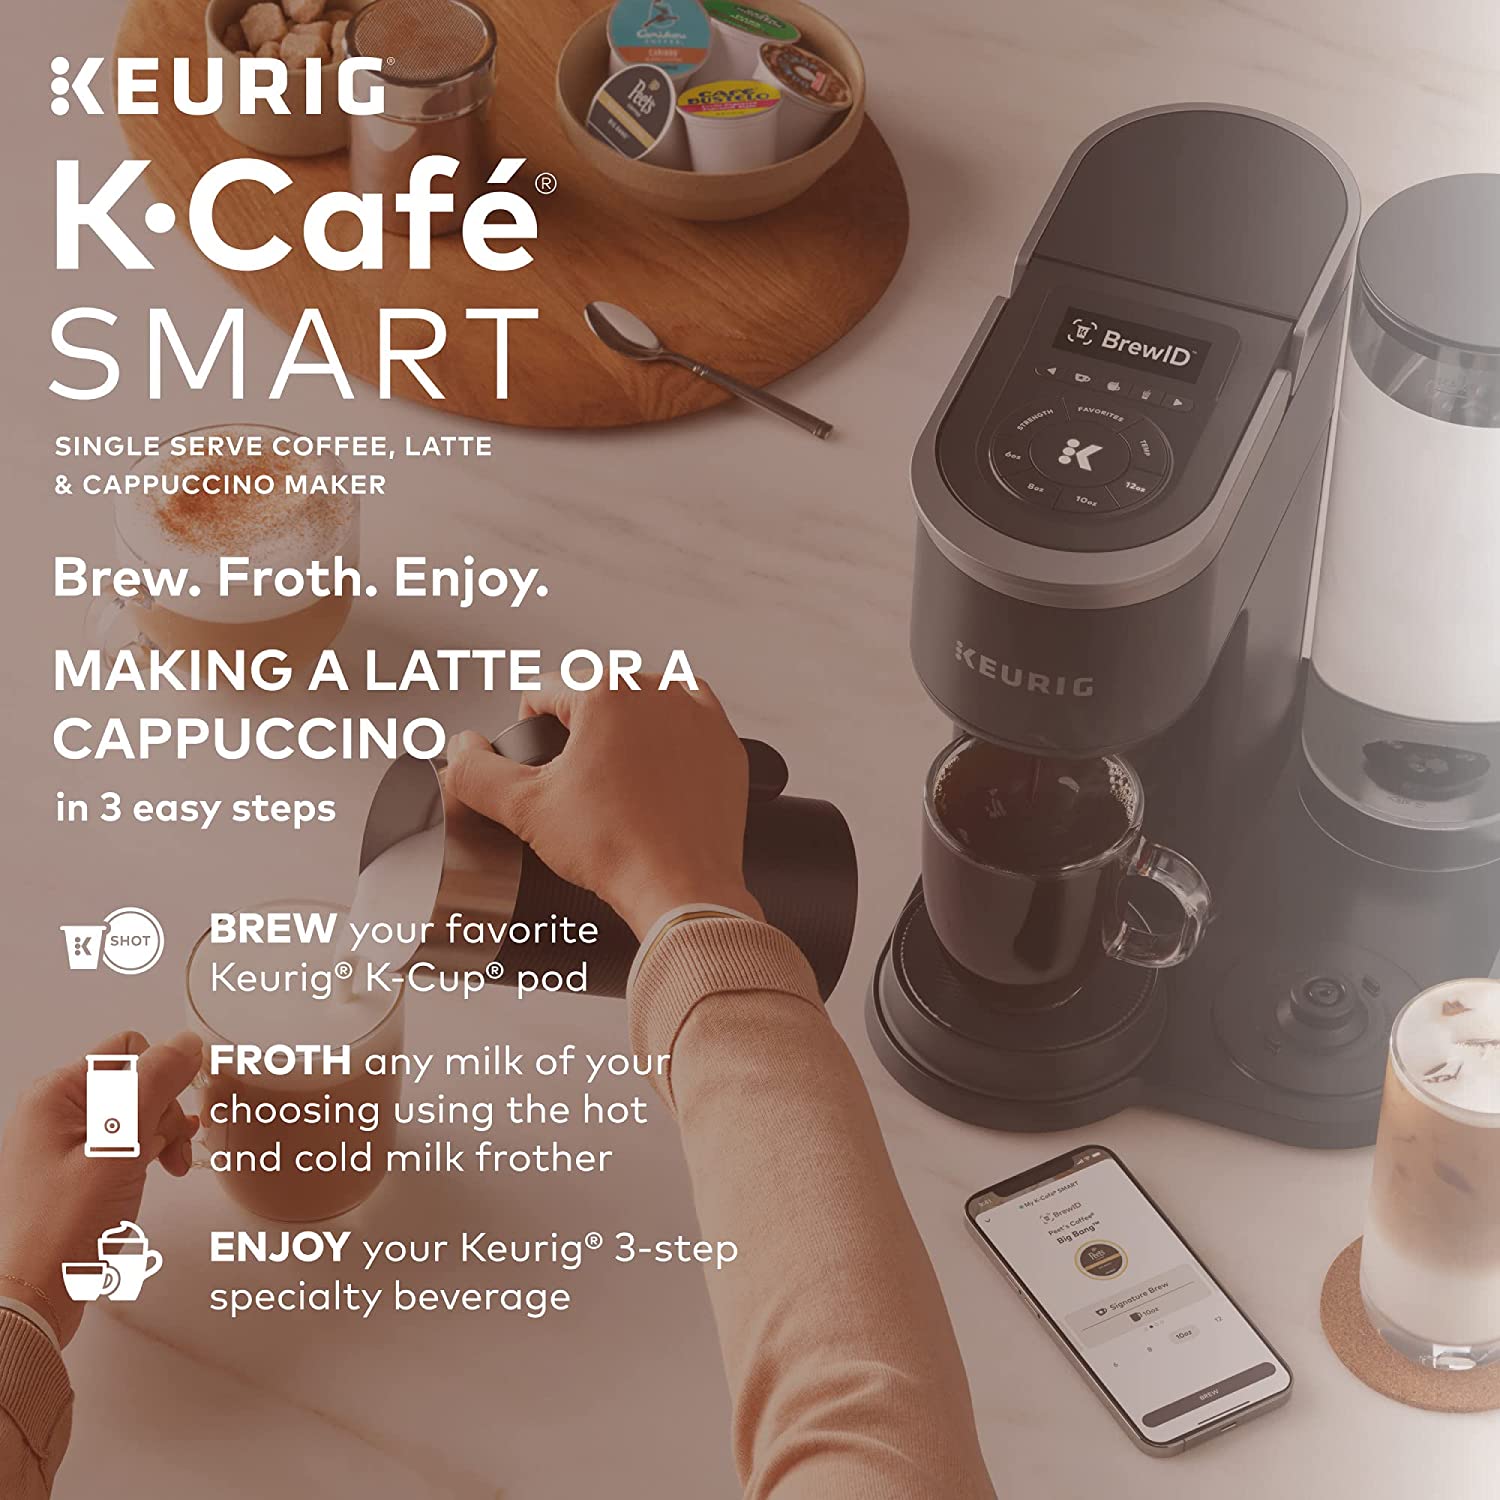 Keurig K-Supreme Plus SMART Single Serve Coffee Maker with WiFi